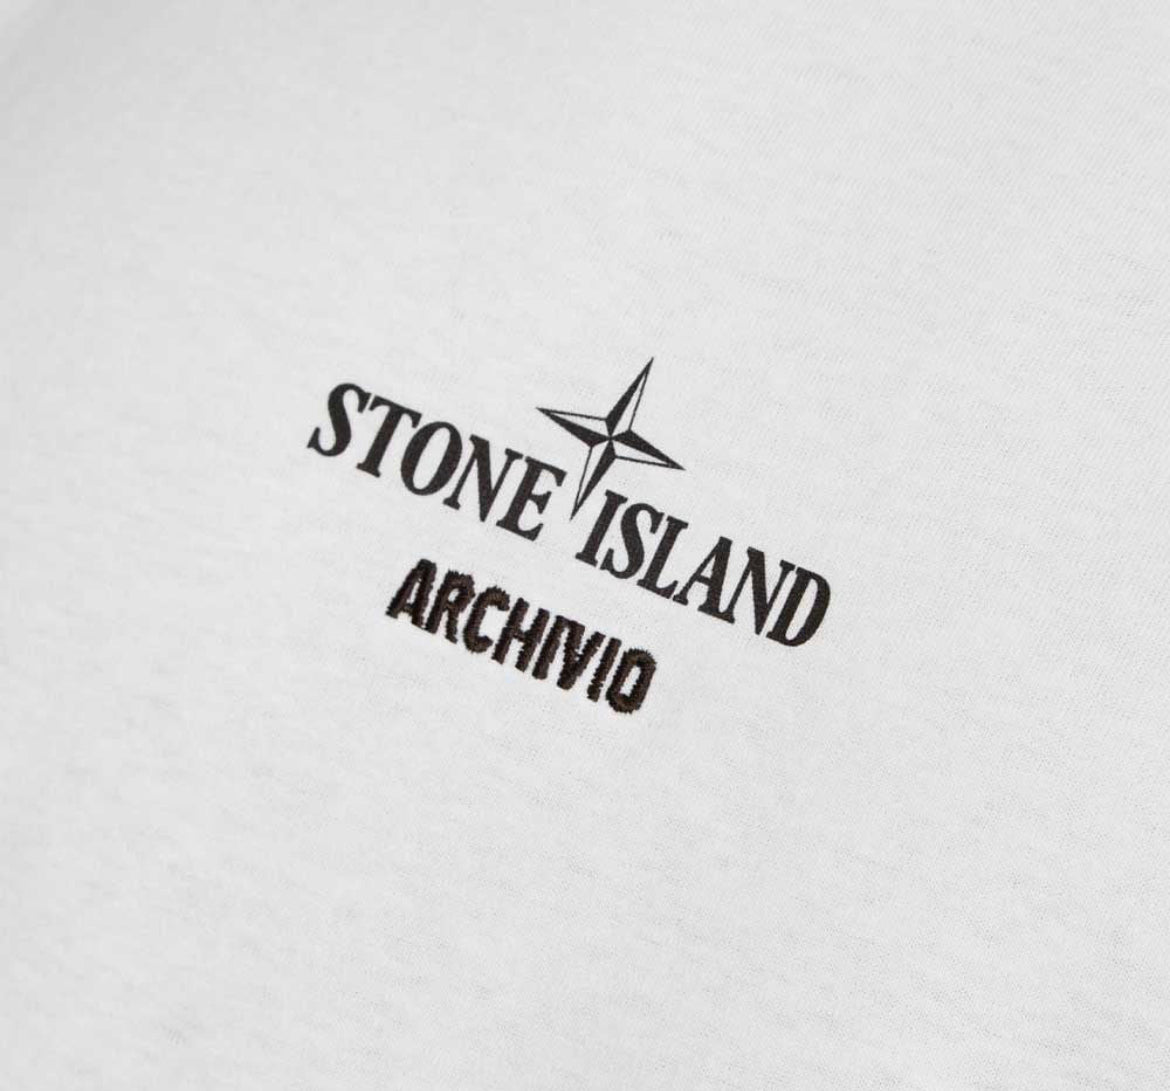 Stone Island ARCHIVIO T-Shirt